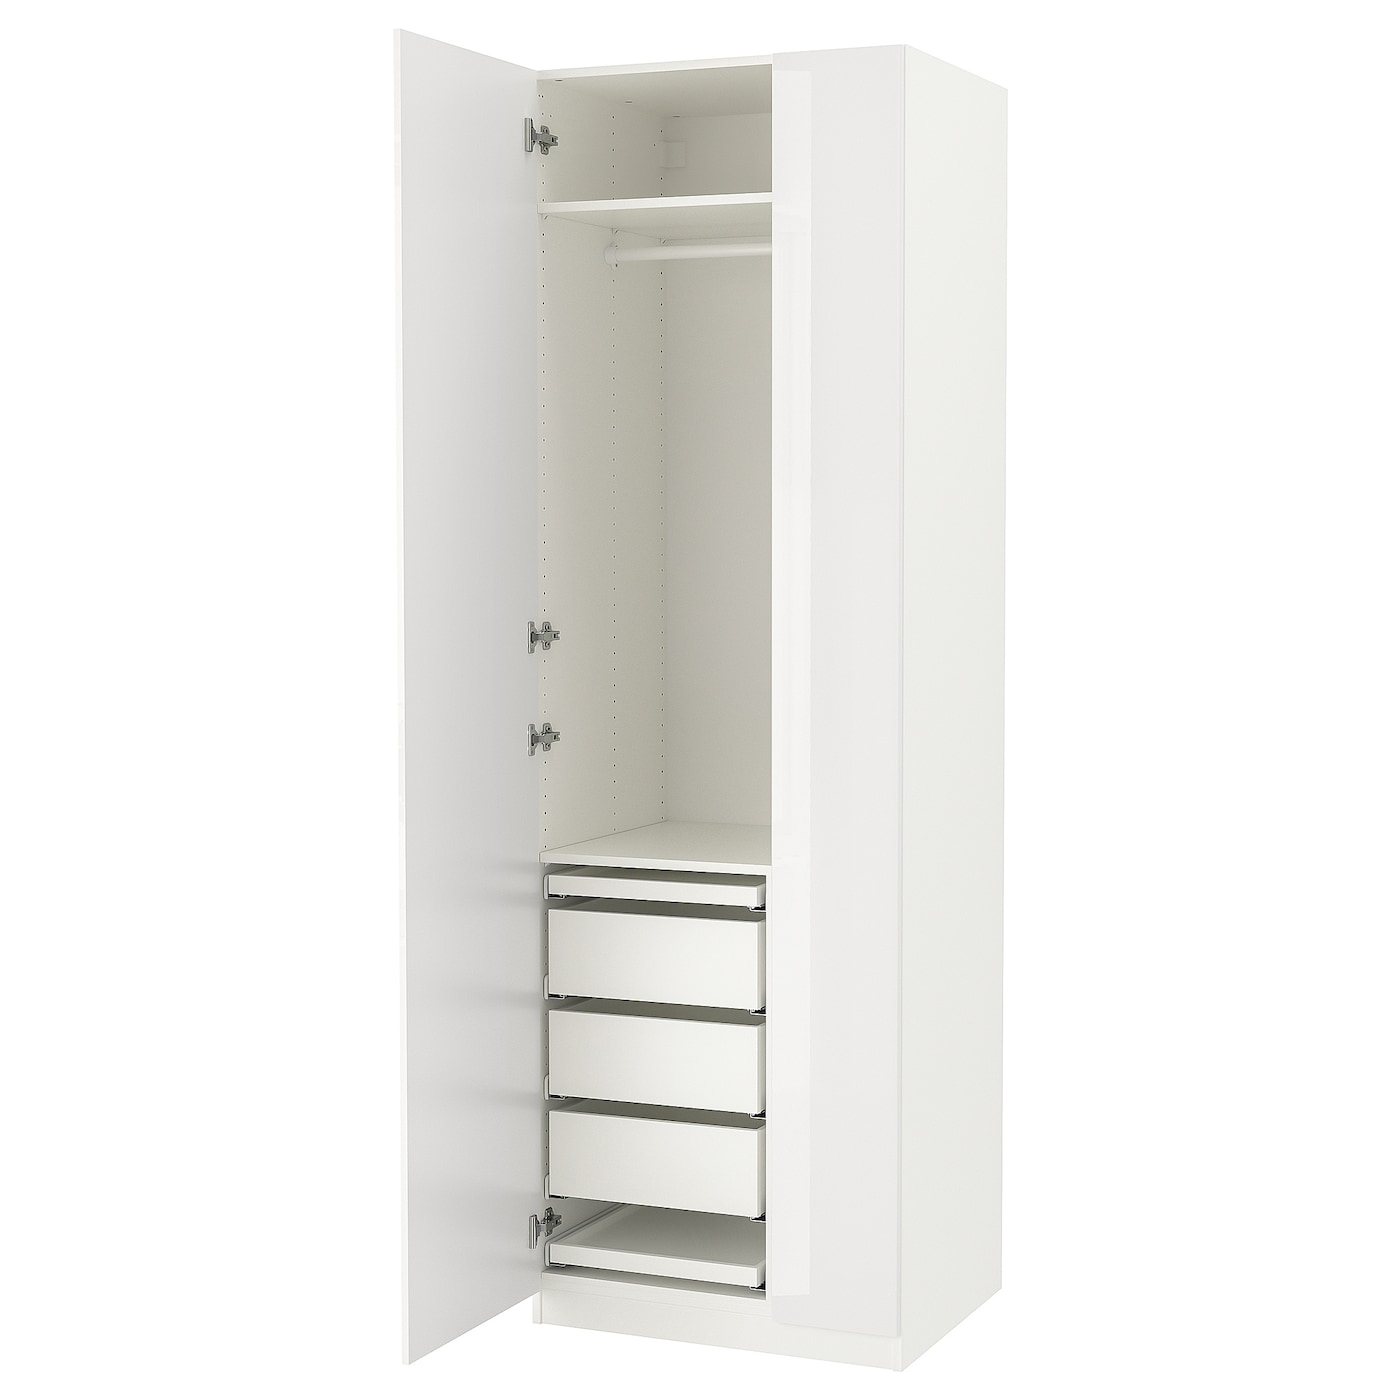 Платяной шкаф - IKEA PAX/FARDAL, 75x60x236 см, белый ПАКС/ФАРДАЛЬ ИКЕА